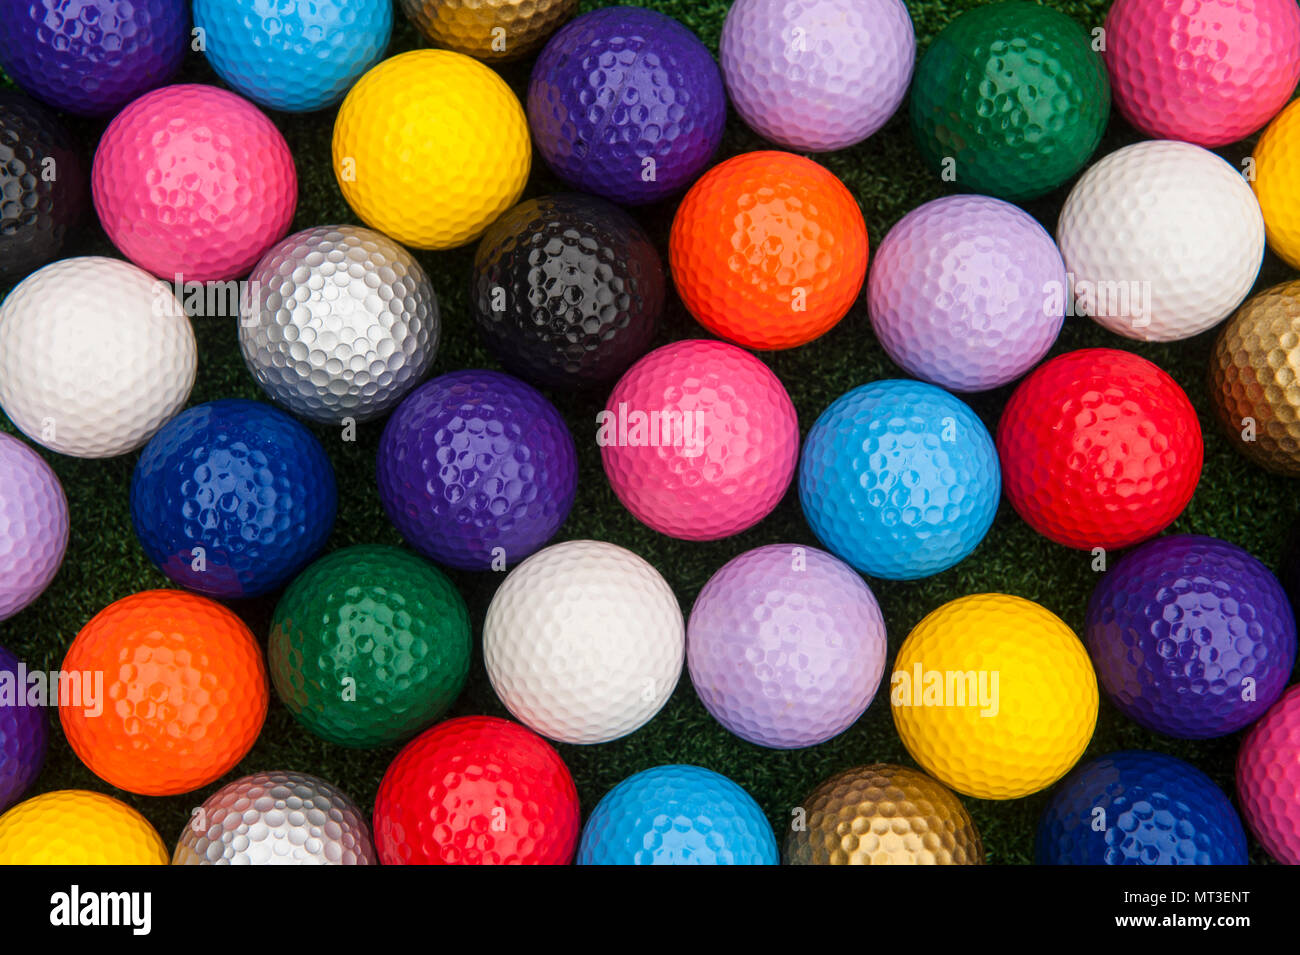 https://c8.alamy.com/comp/MT3ENT/variety-of-colorful-balls-for-putt-putt-or-mini-golf-MT3ENT.jpg